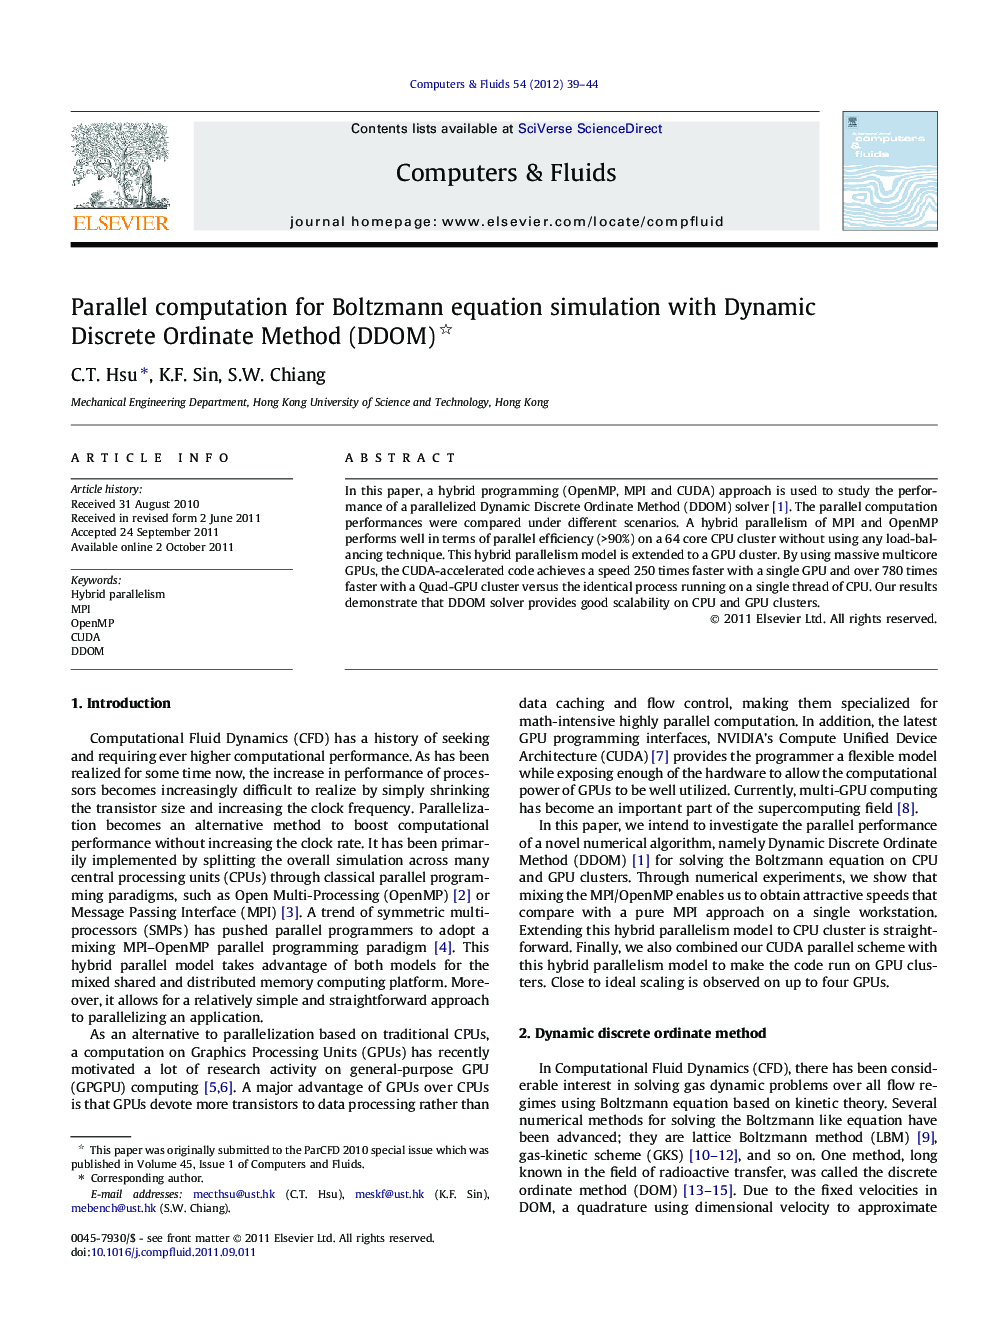 Parallel computation for Boltzmann equation simulation with Dynamic Discrete Ordinate Method (DDOM) 